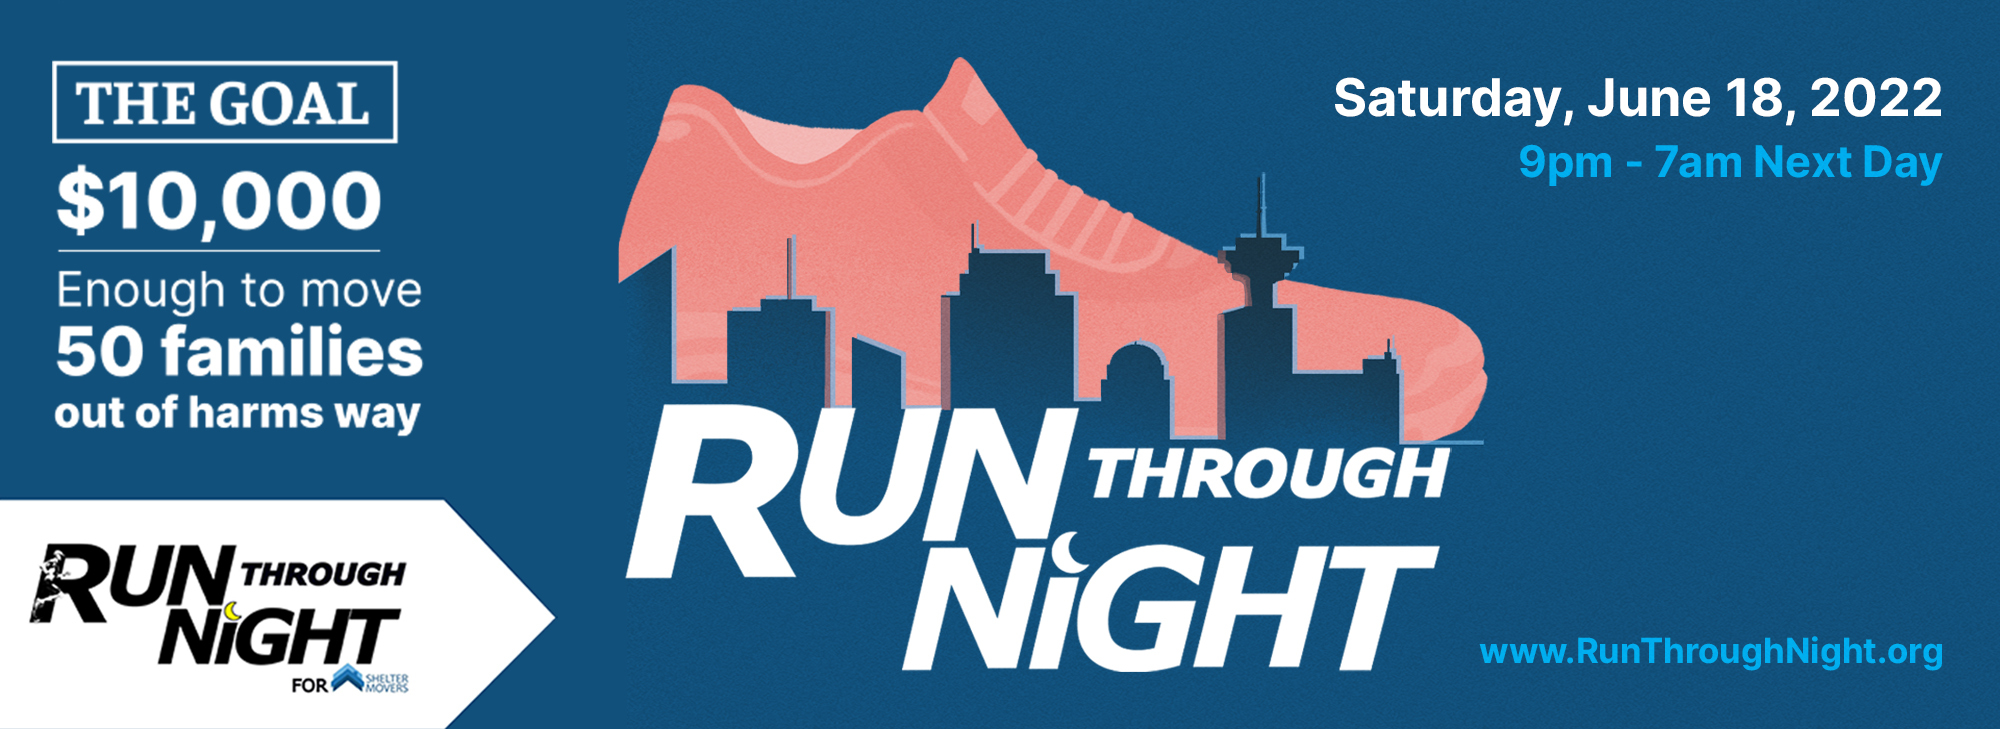 Run Through Night Event